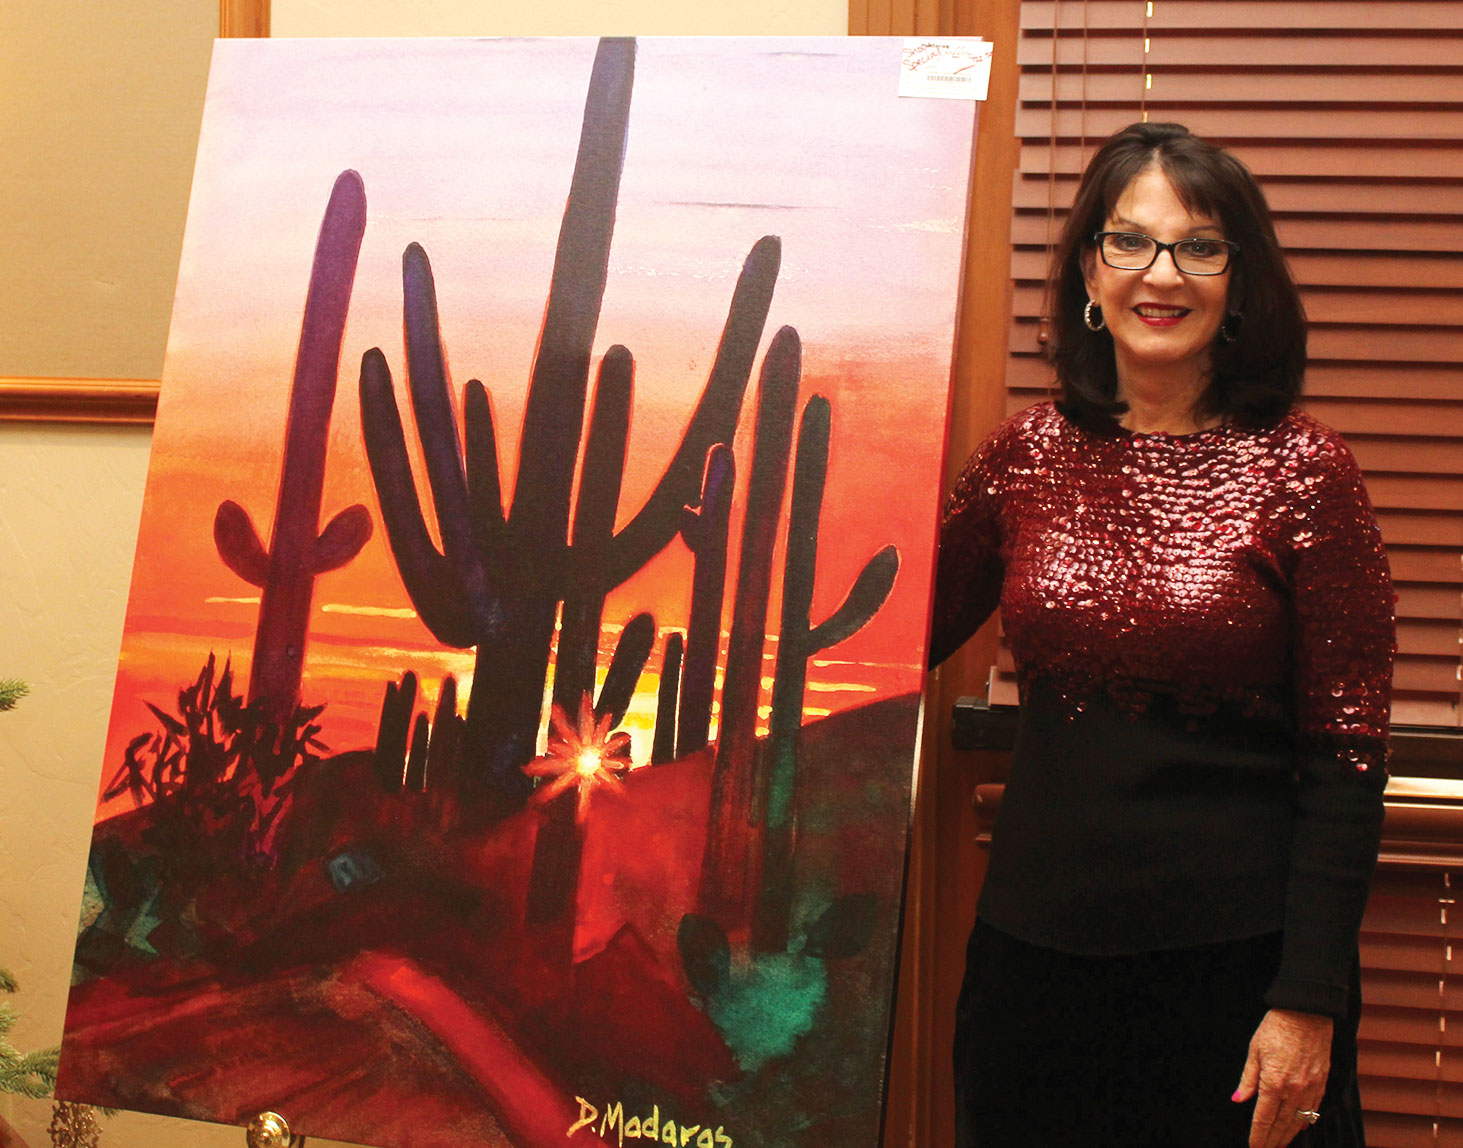 Speaker Diana Madaras is active with philanthropic causes in Tucson.